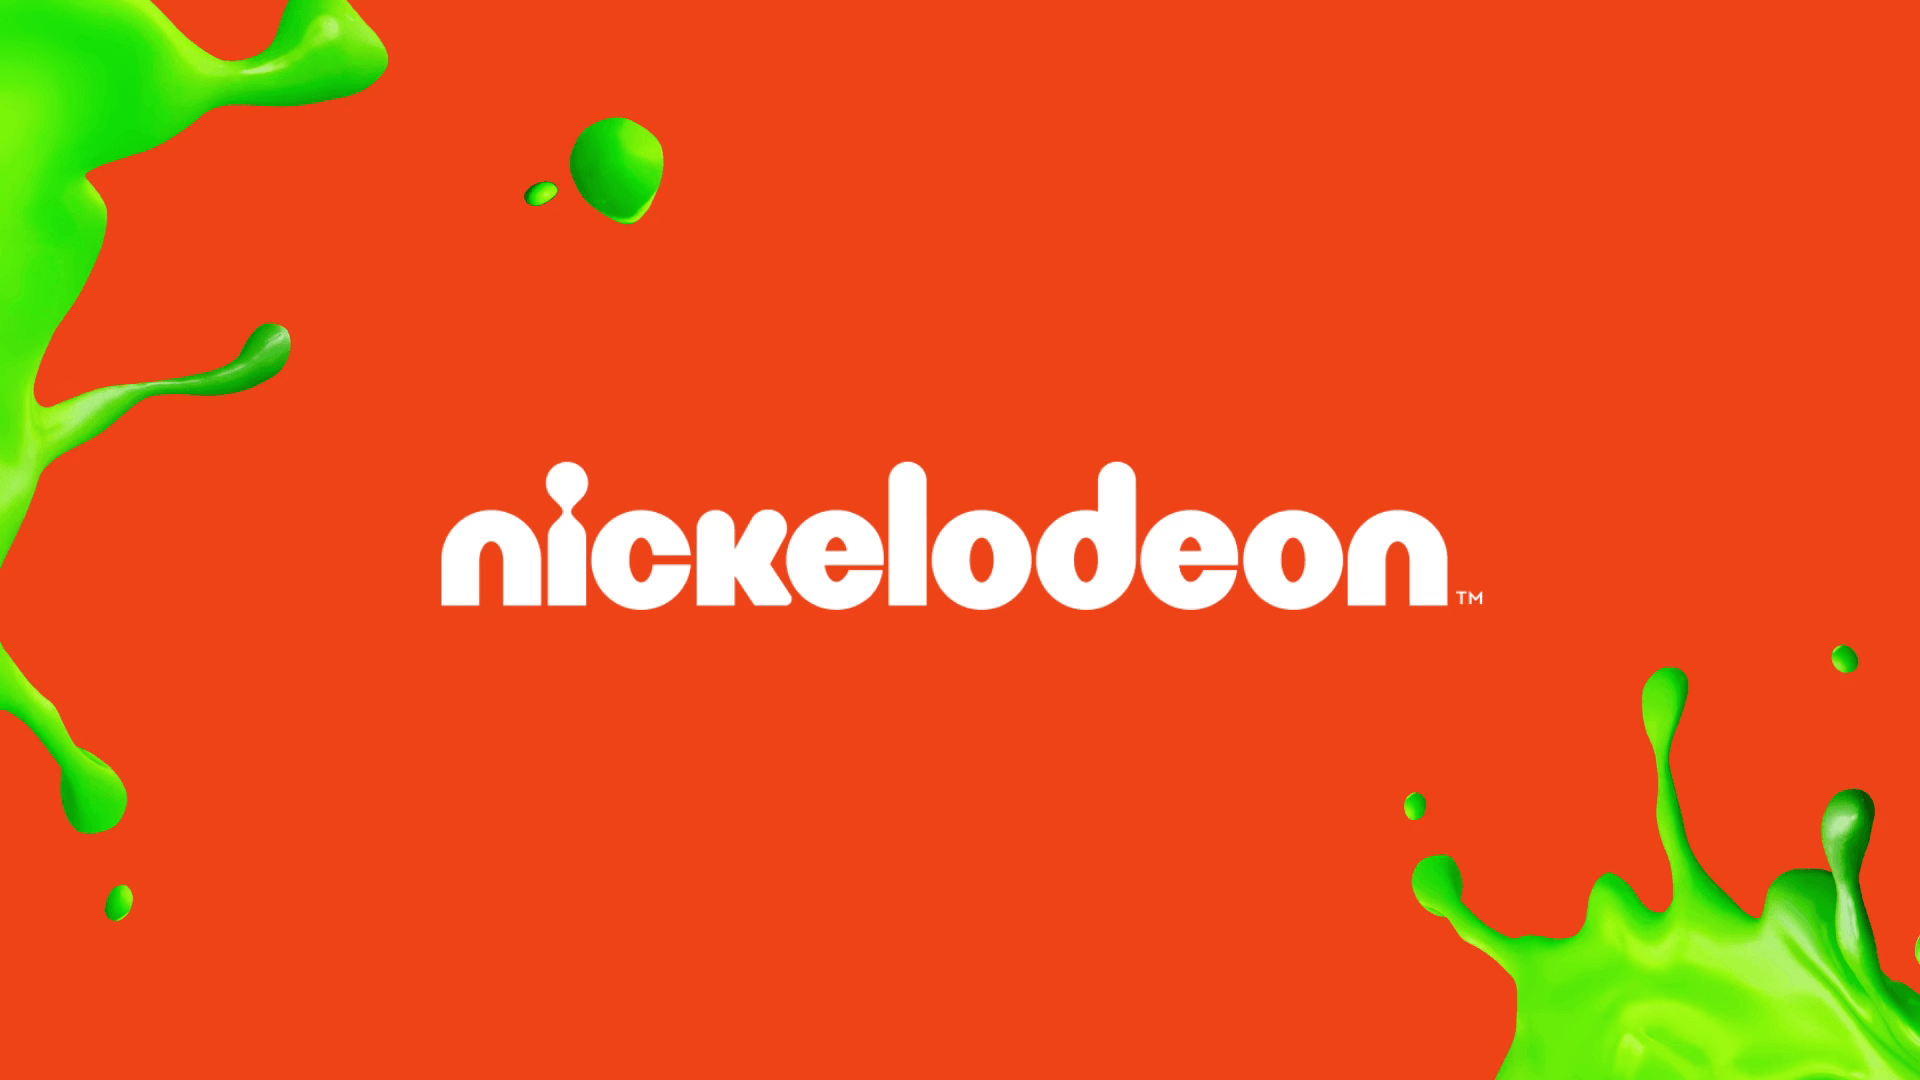 Nickelodean Logo - Image - Nickelodeon-2016-logo-with-slime-nick.png | Logopedia ...